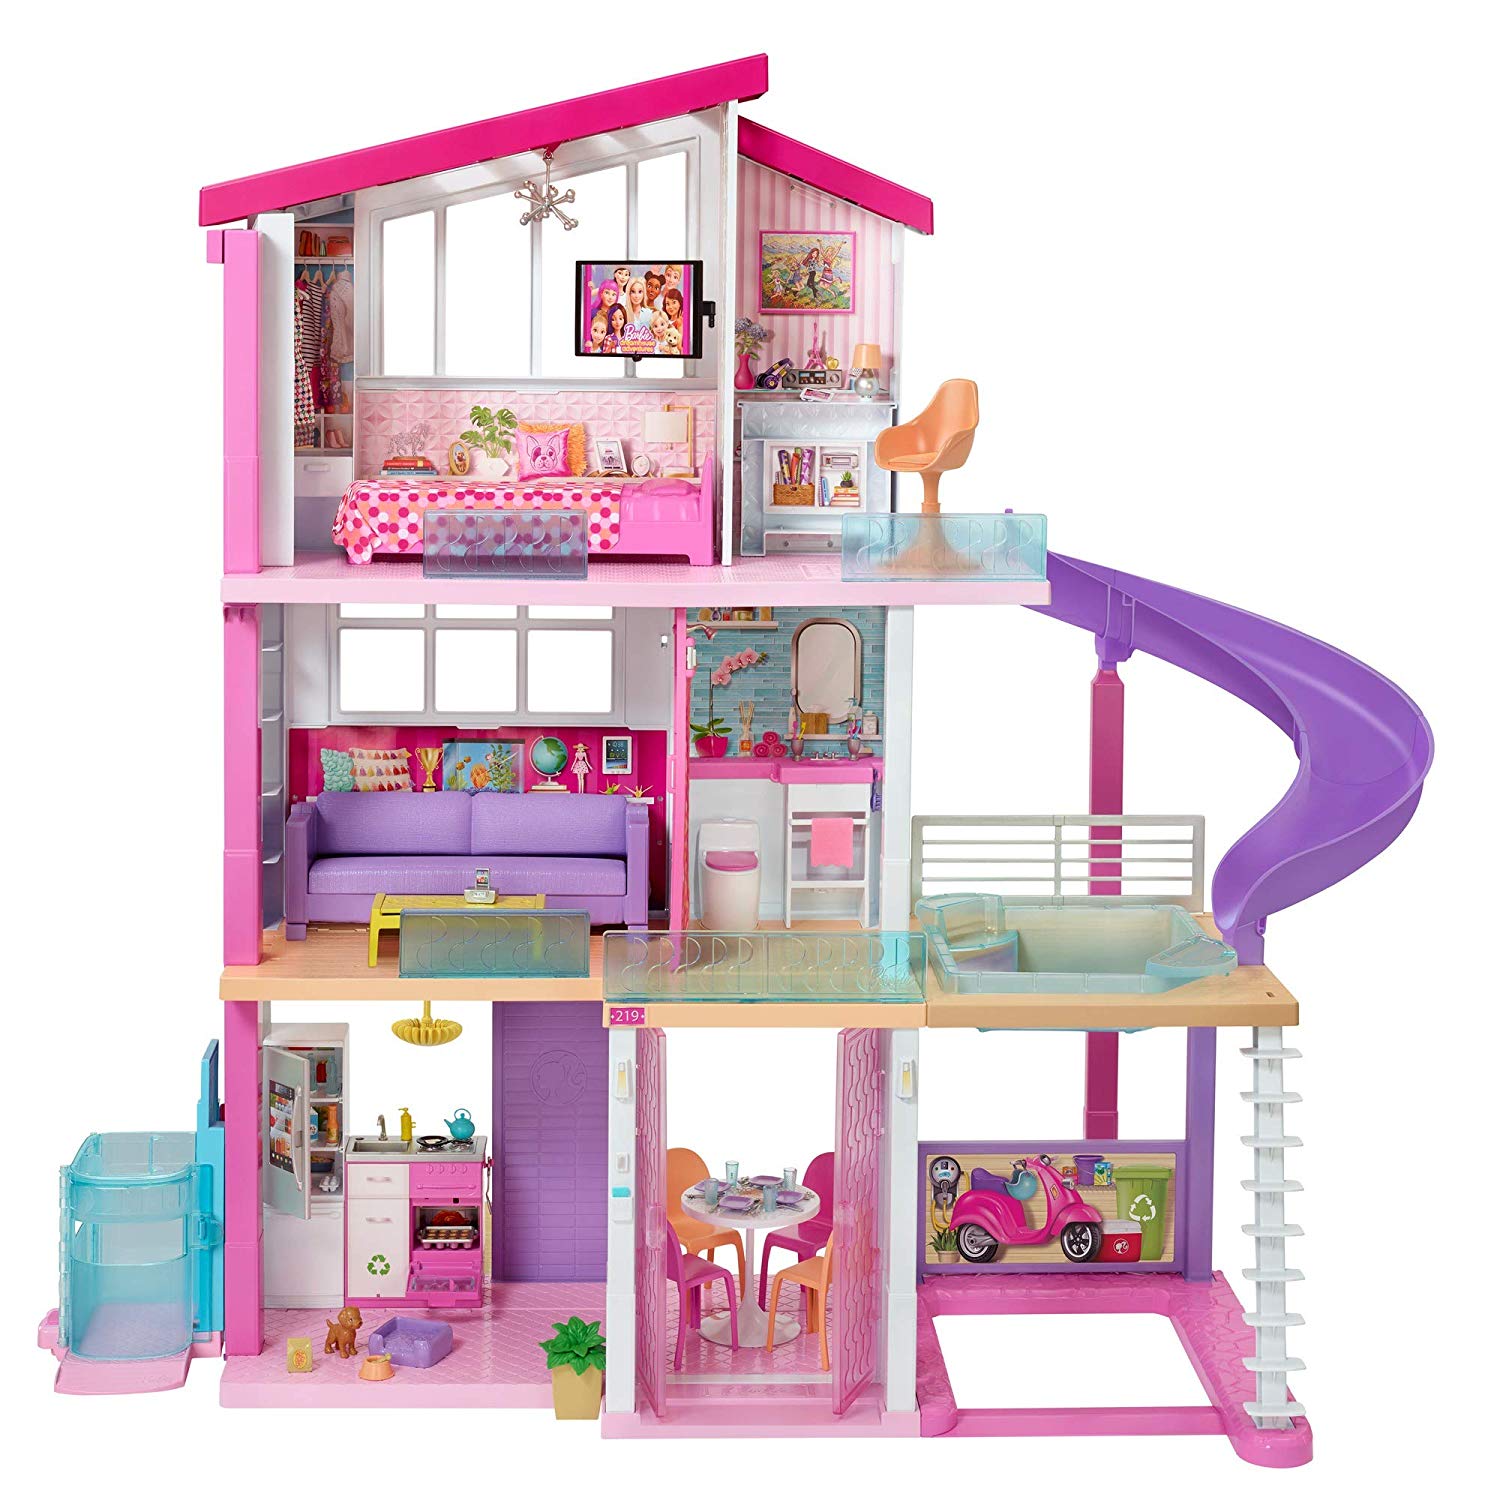 New Barbie Dream House doll house 2020